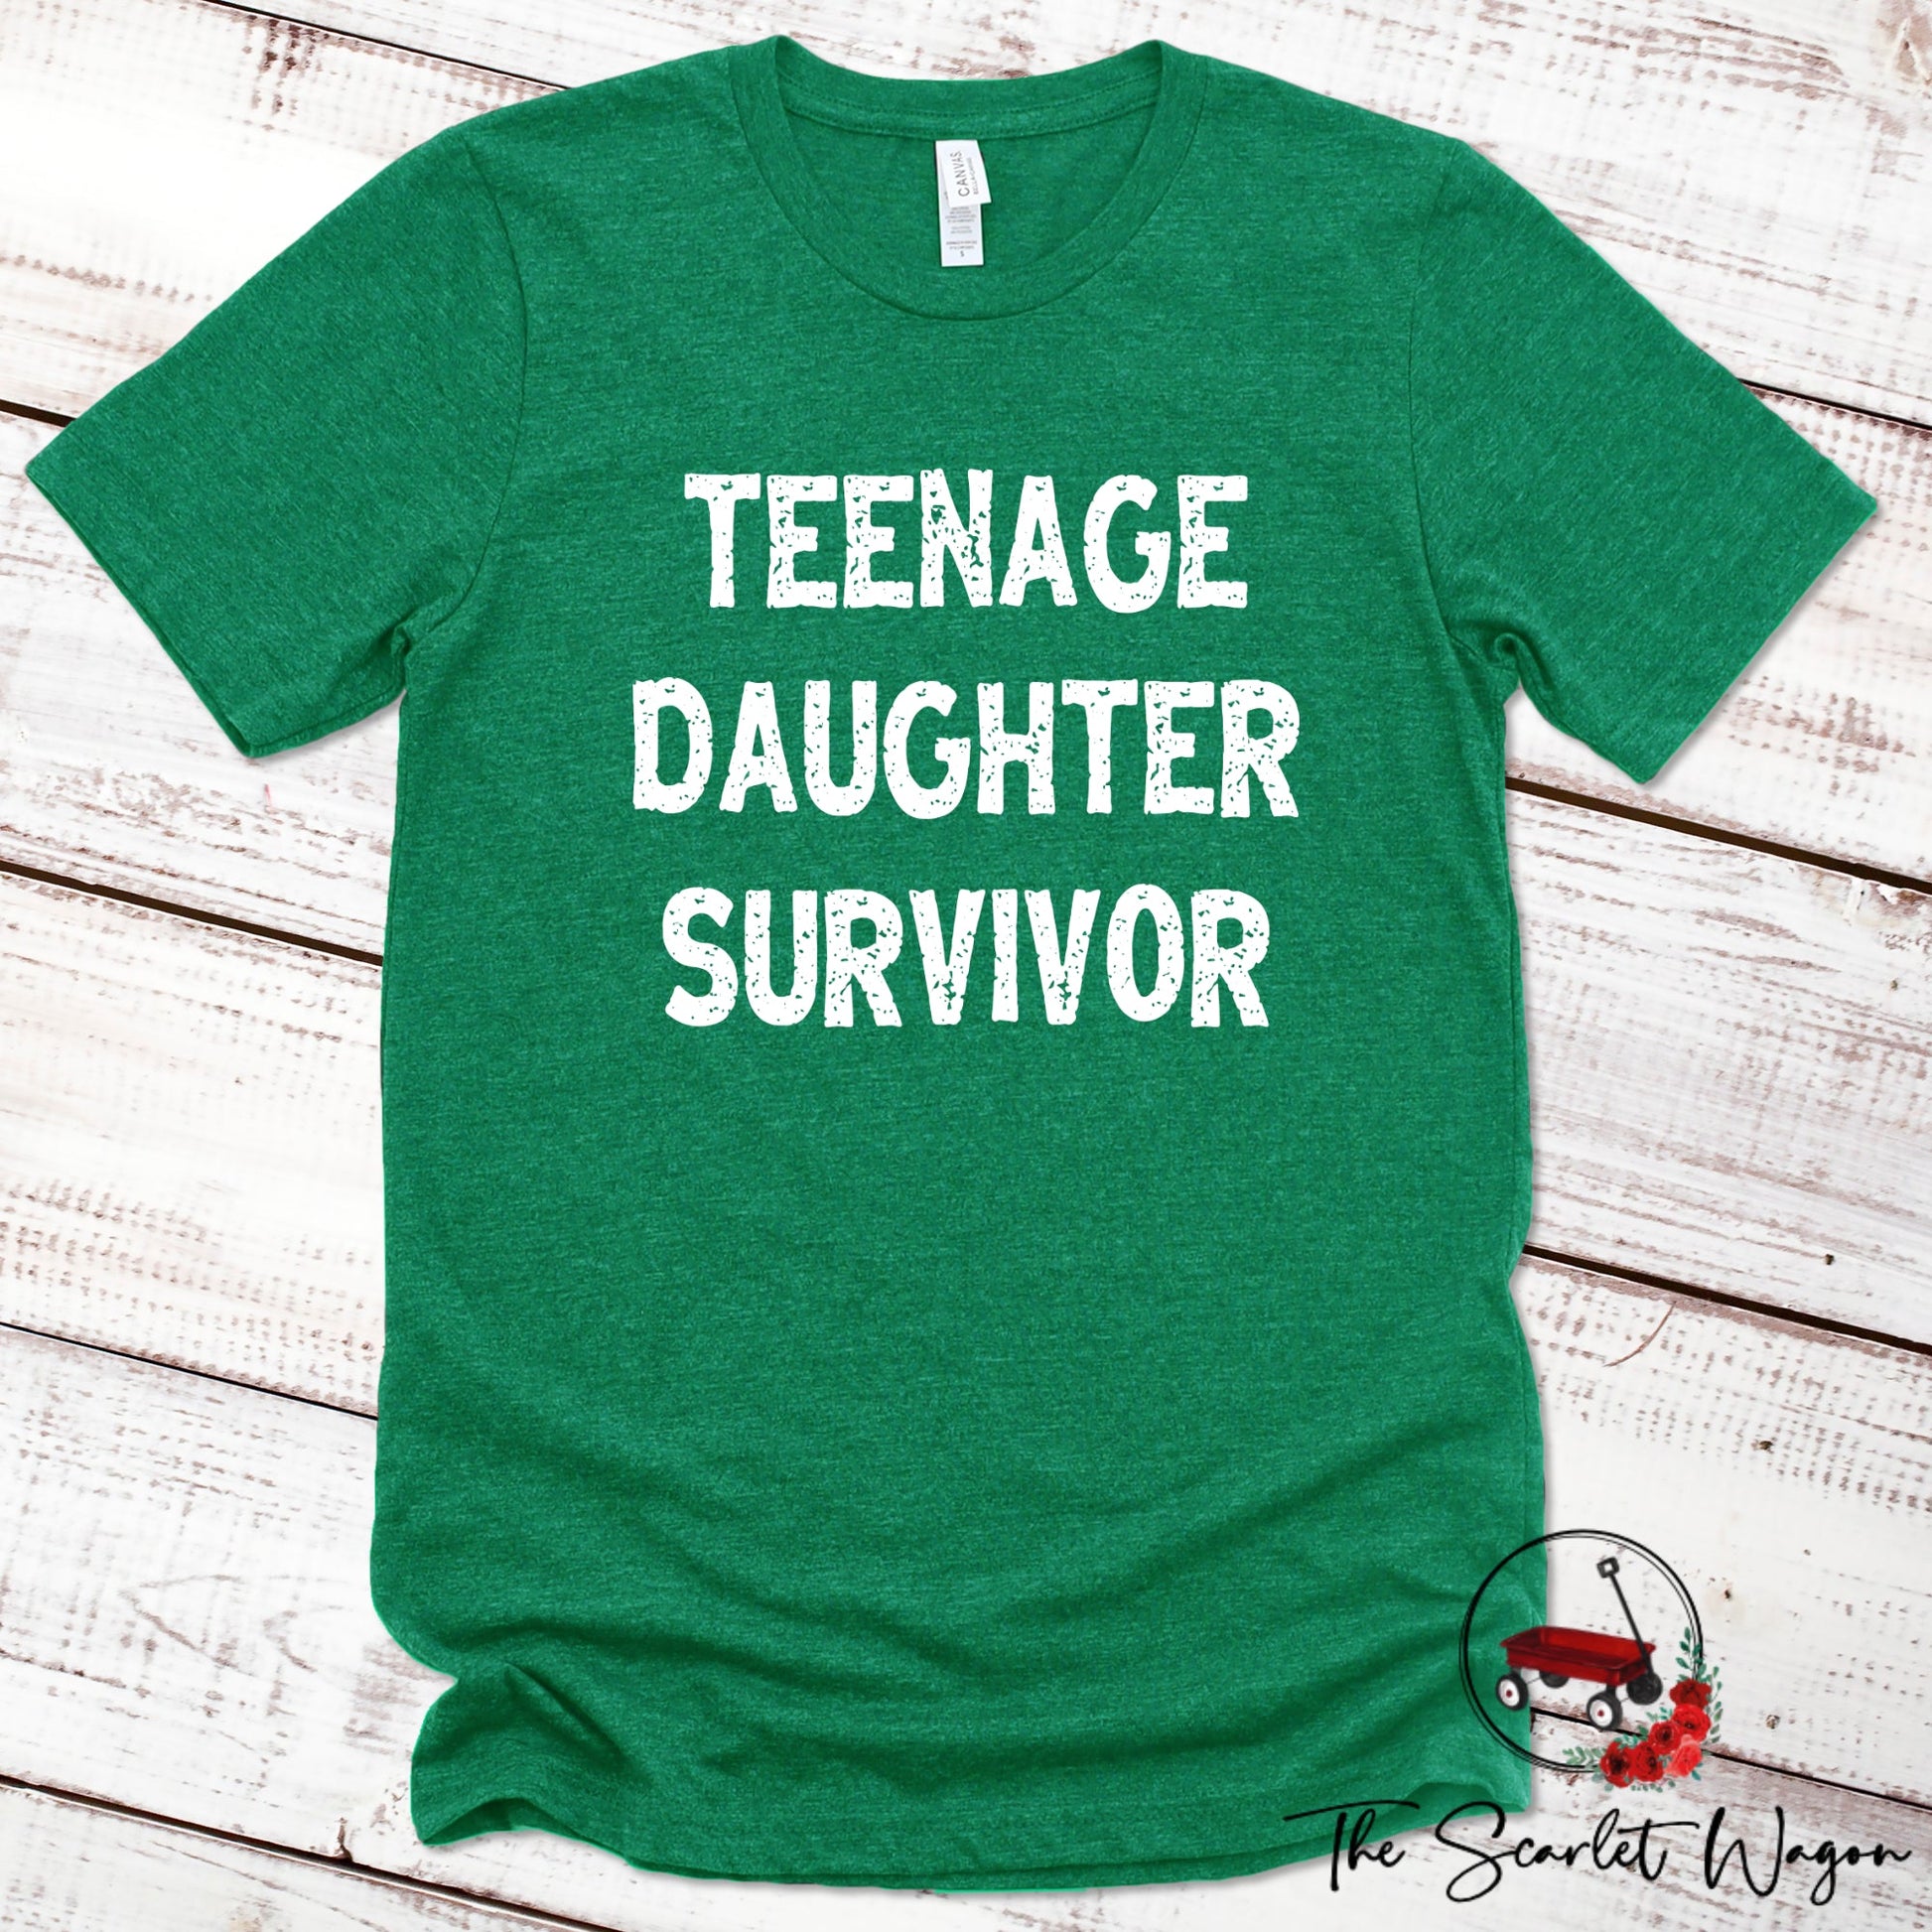 Teenage Daughter Survivor Premium Tee Scarlet Wagon Heather Green XS 